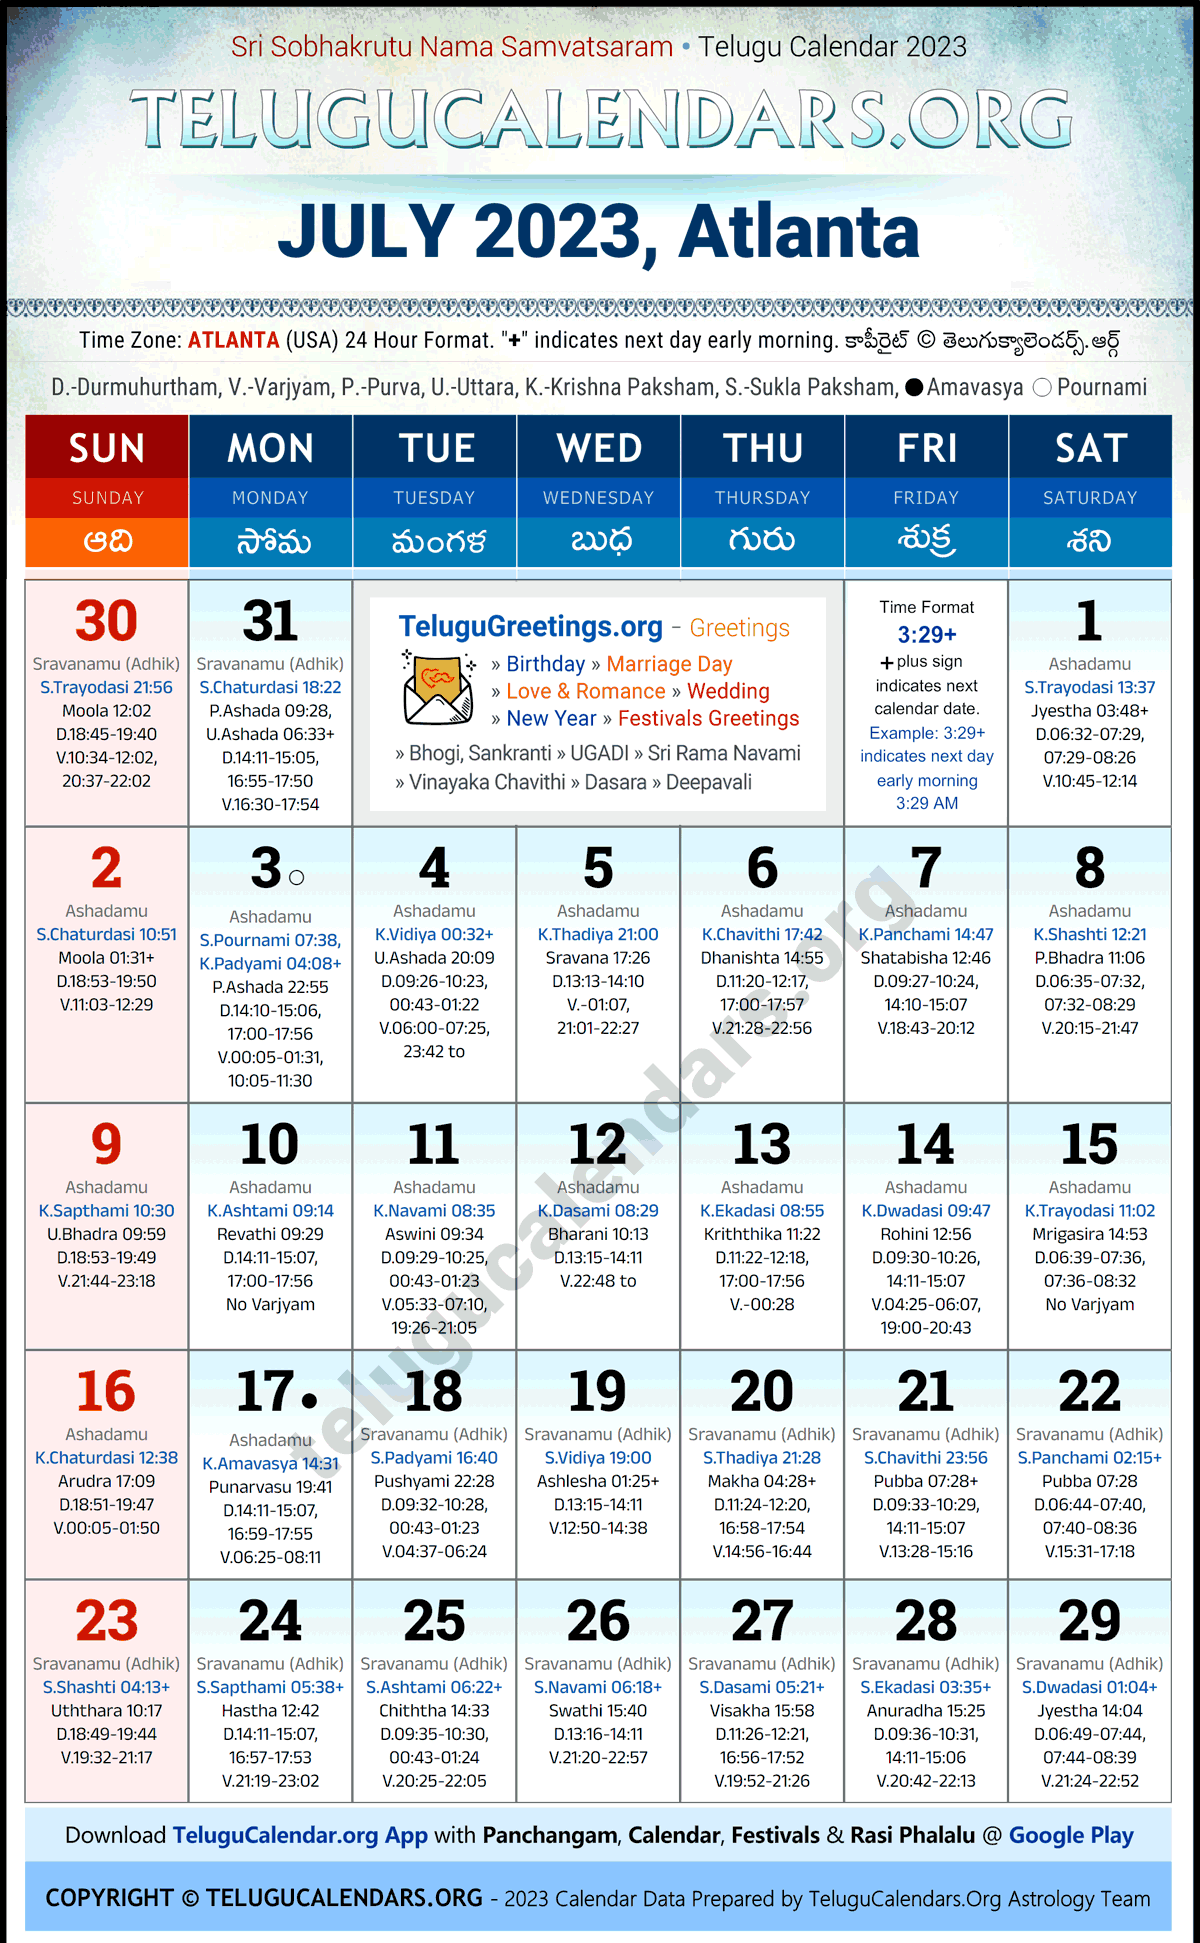 Telugu Calendar 2023 July Festivals for Atlanta